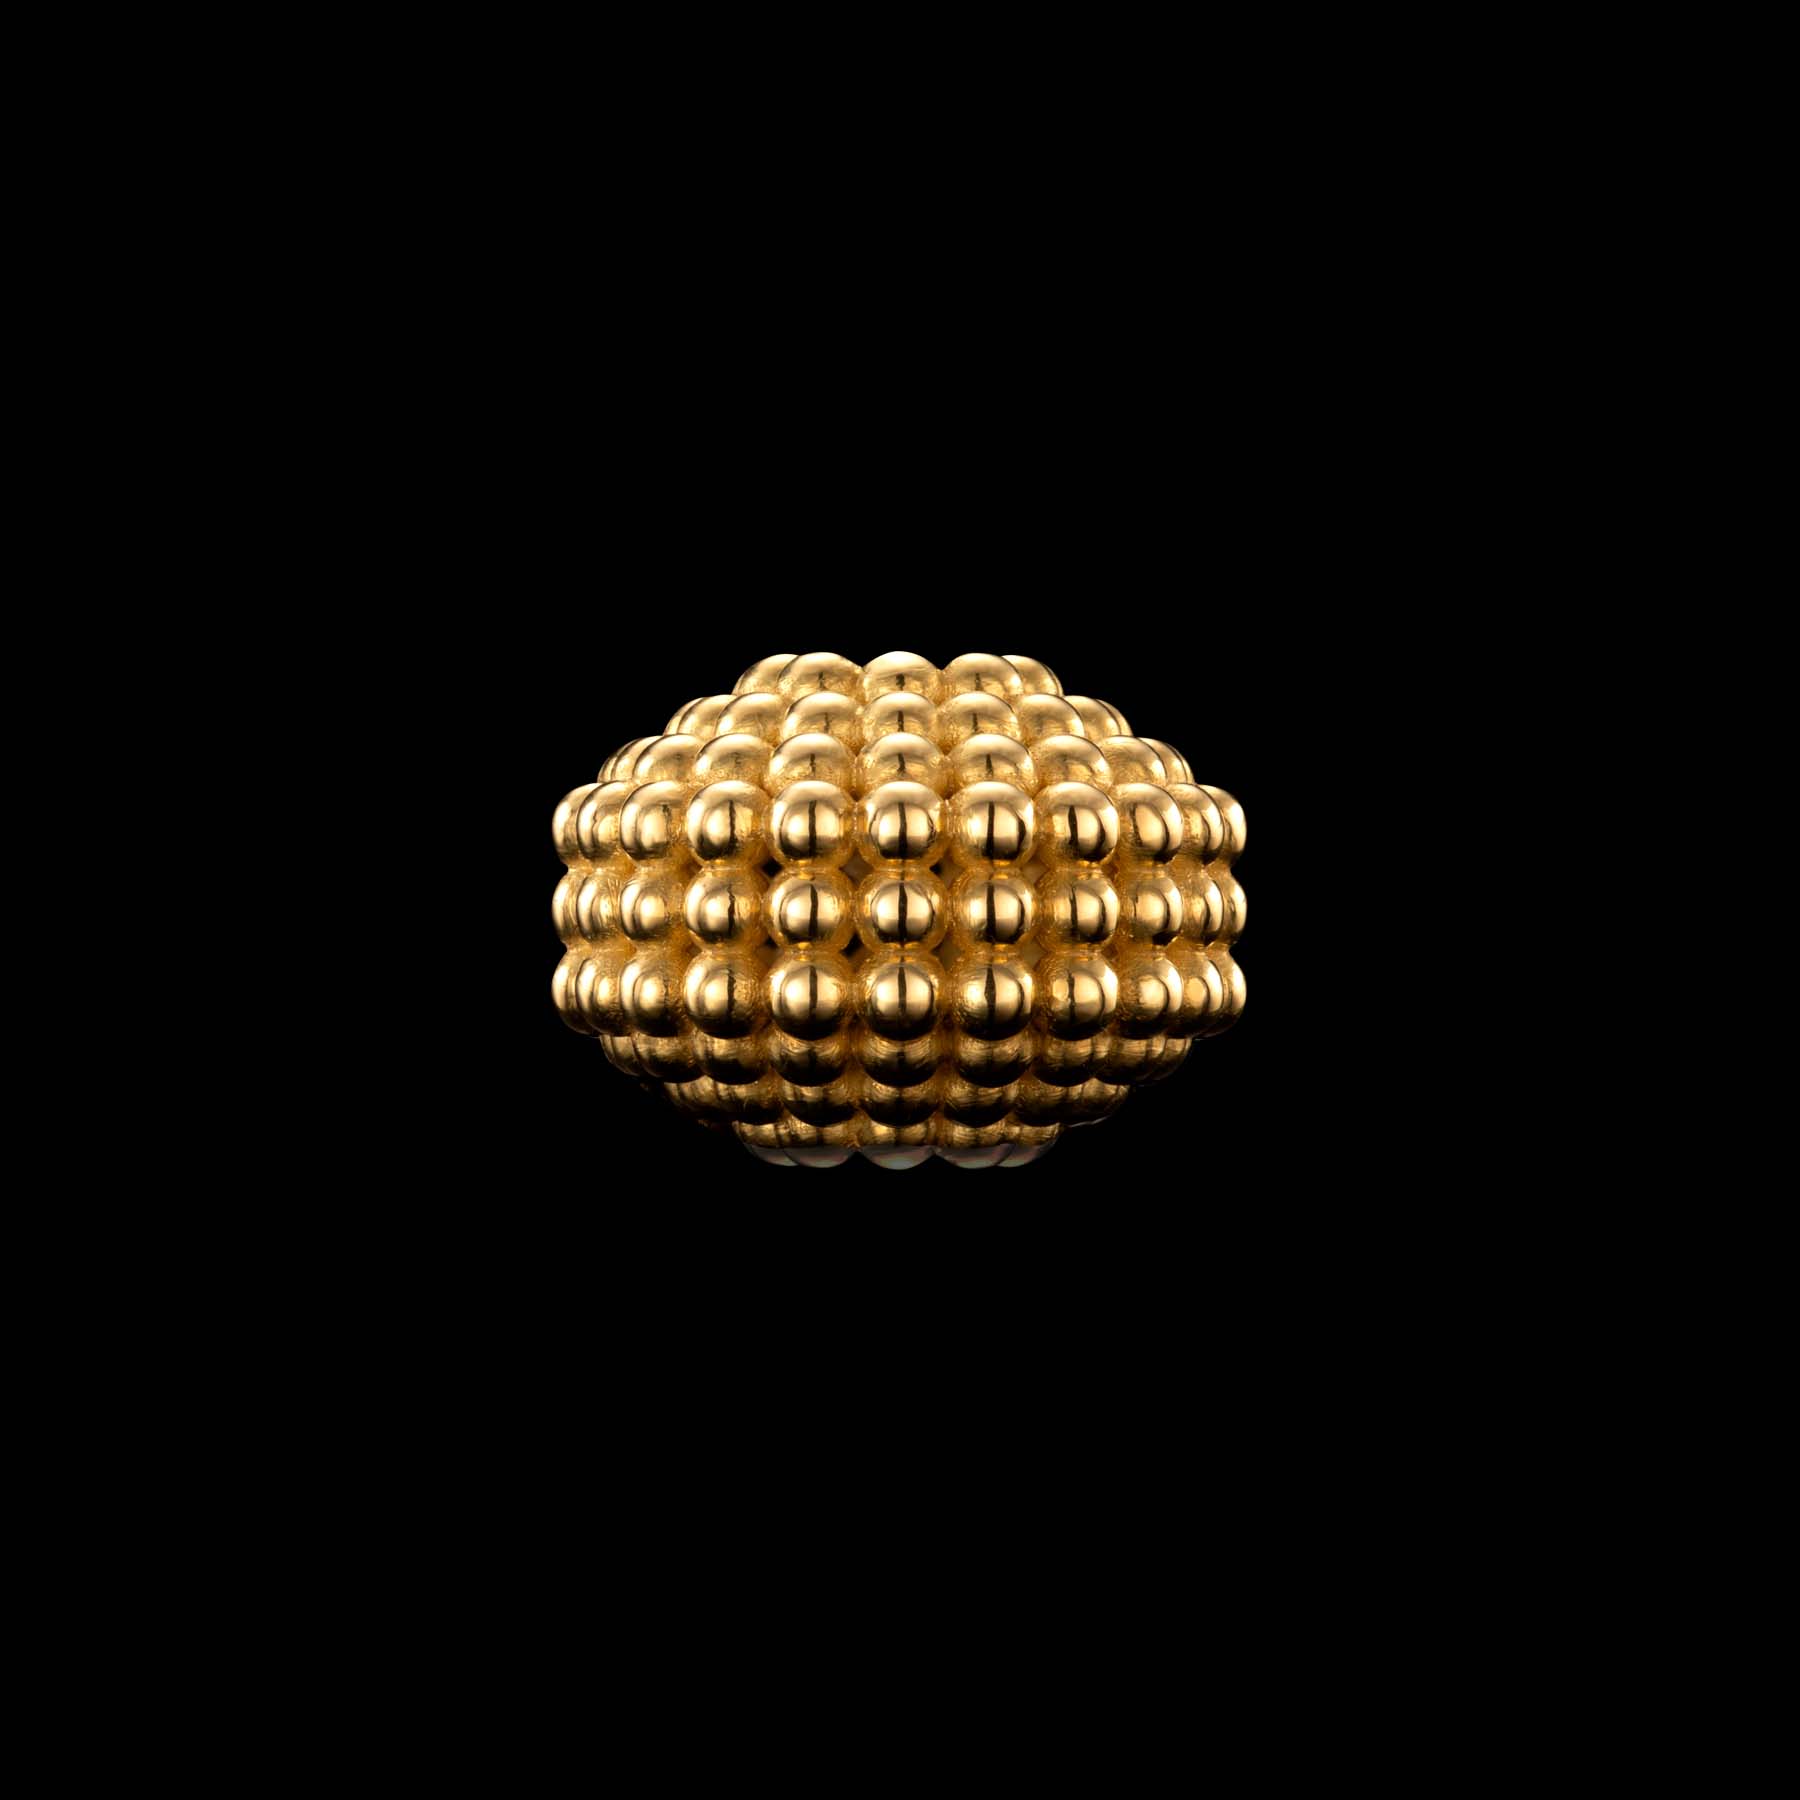 Goldenway ring by designer Solange Azagury-Partridge - 18 carat Yellow Gold - front view orizontal.